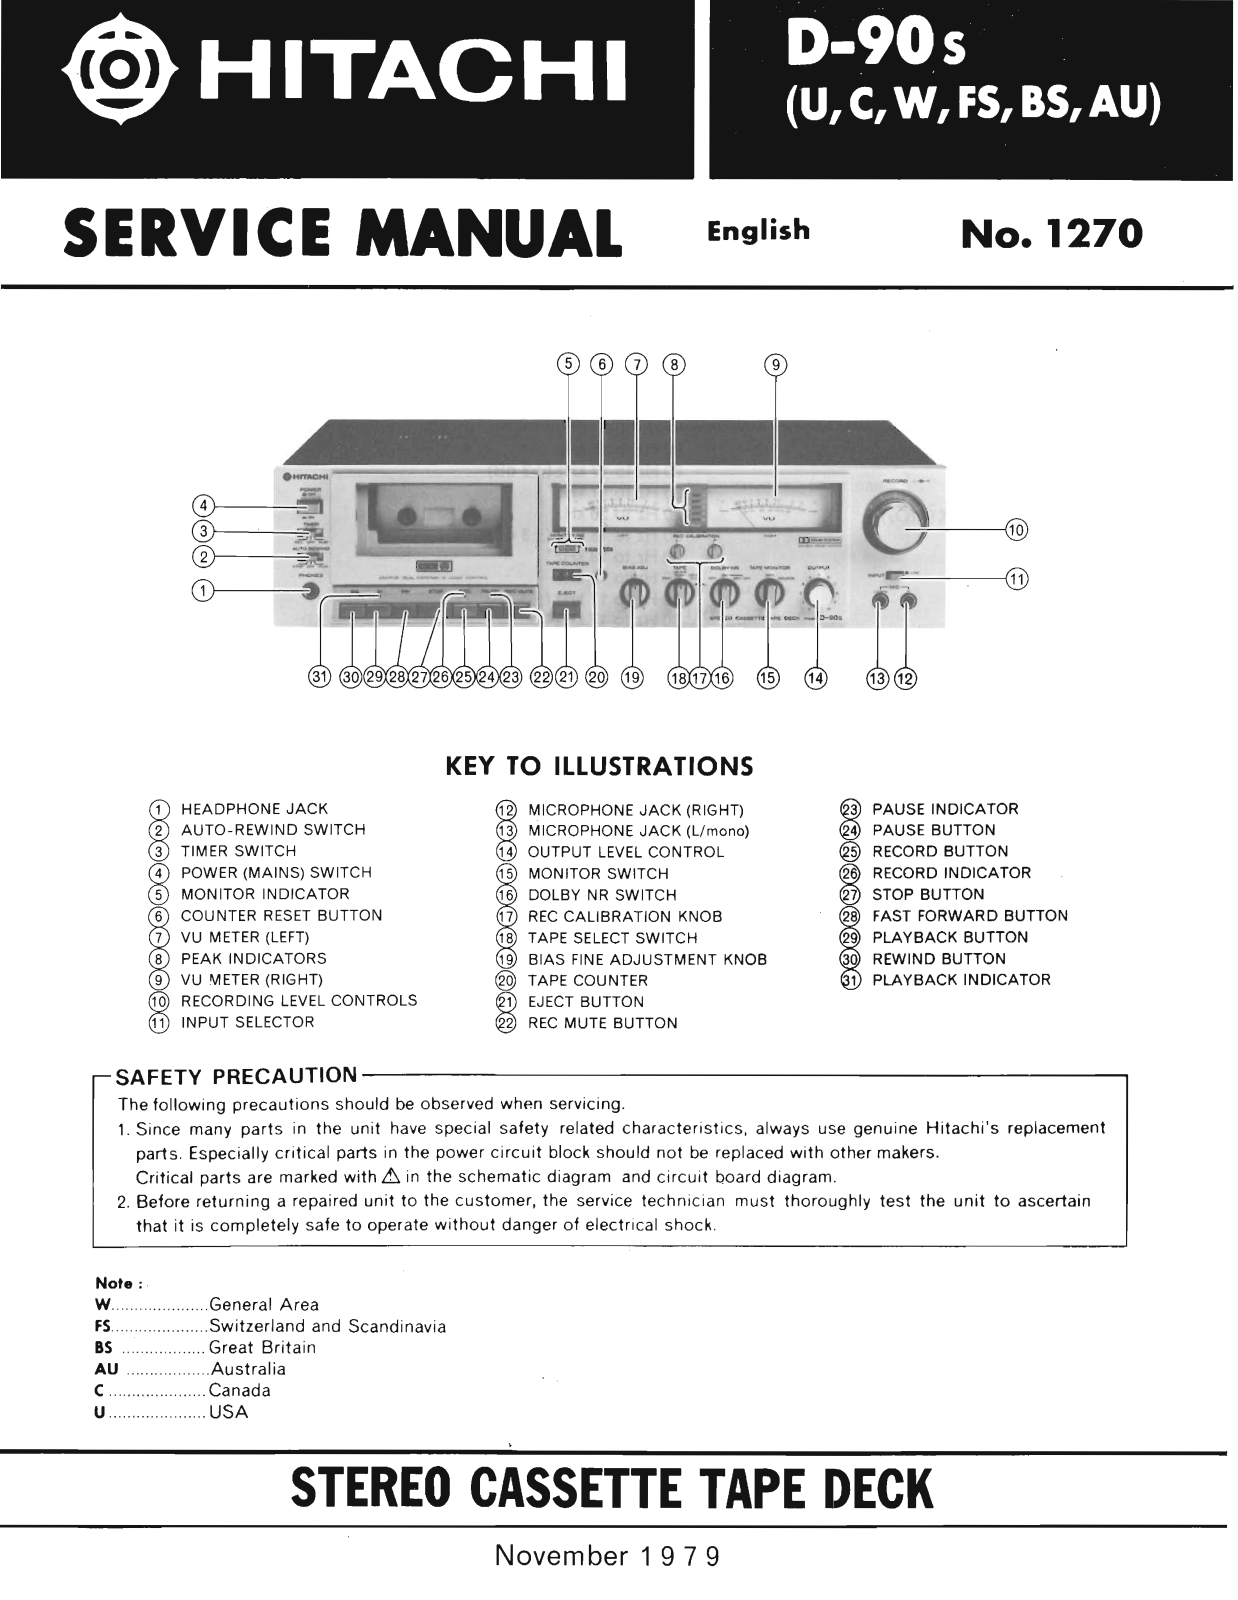 Hitachi D-90-S Service Manual